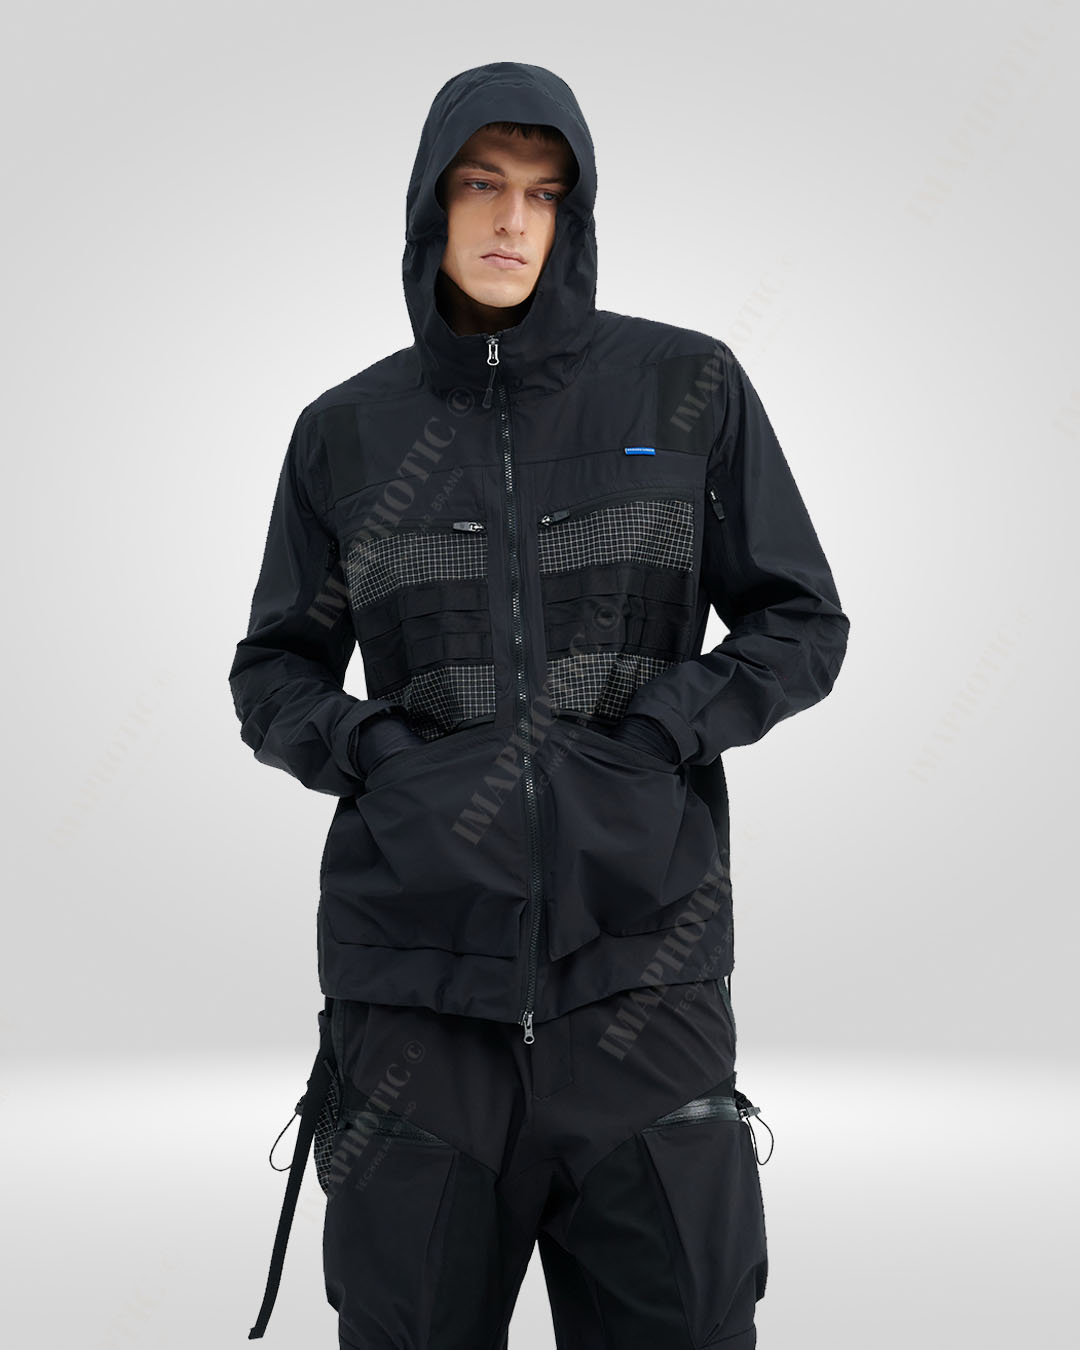 Adventurer\'s Hooded Outdoor Jacket - Defy the Elements in Style – Imaphotic | Windbreakers